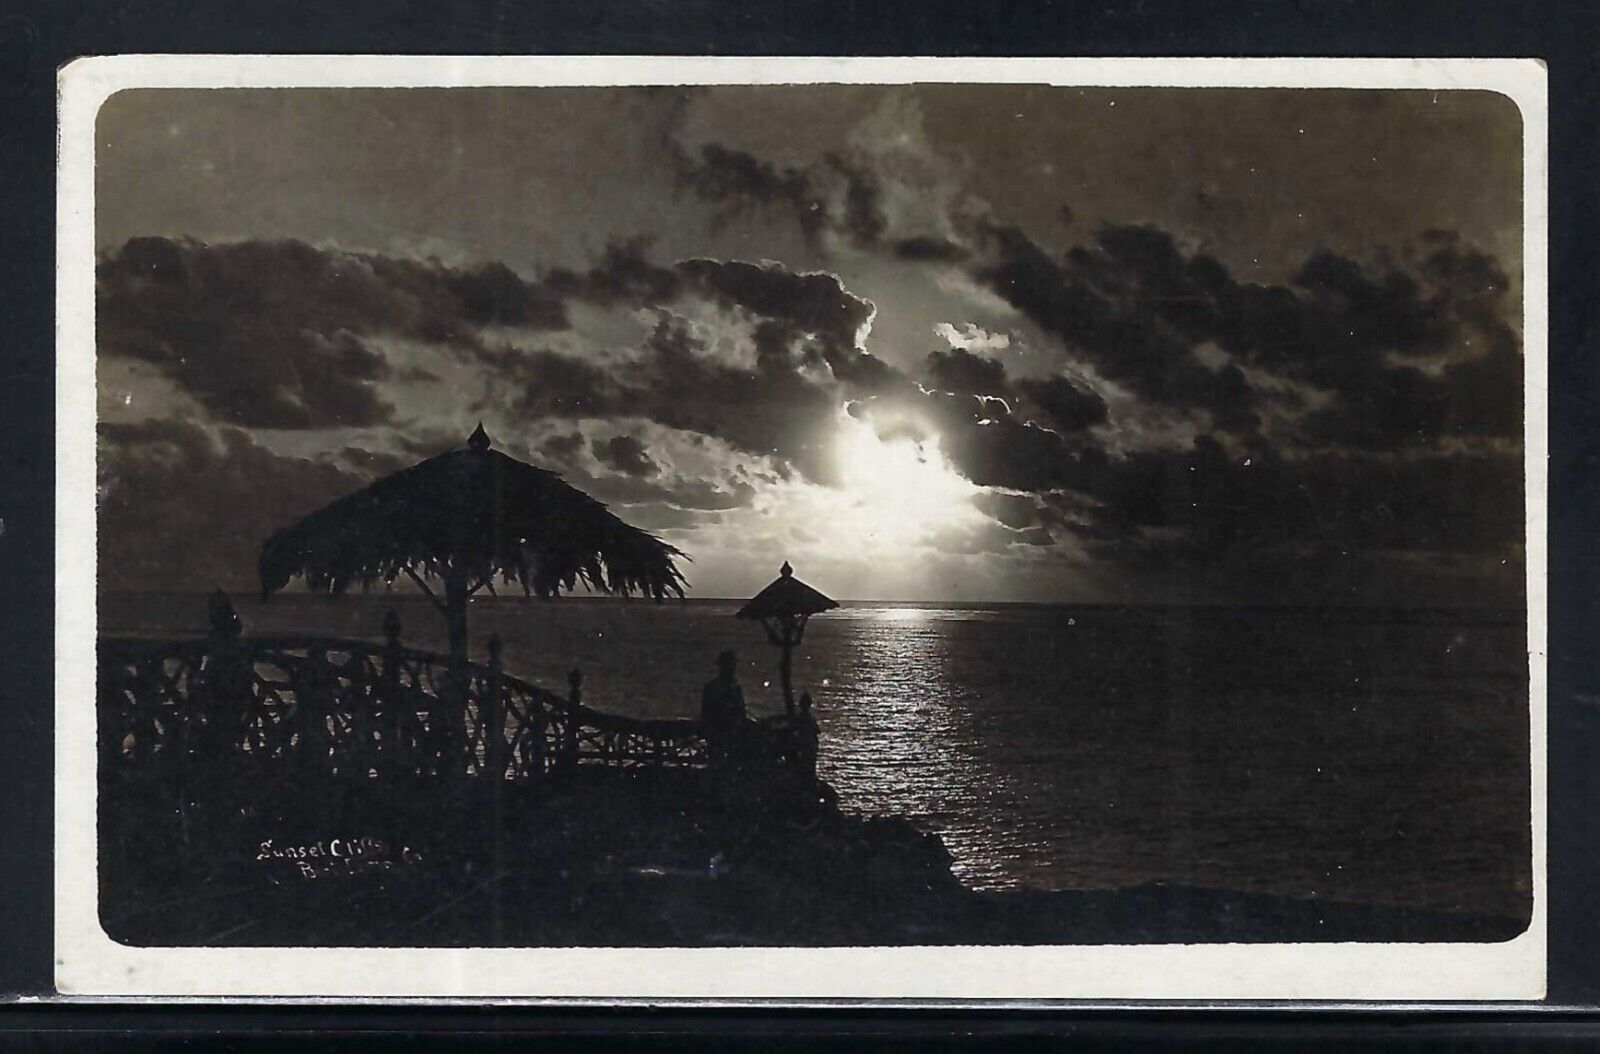 RPPC - SUNSET BEACH (1916) - POINT LOMA CA - UNPOSTED - AZO CARD